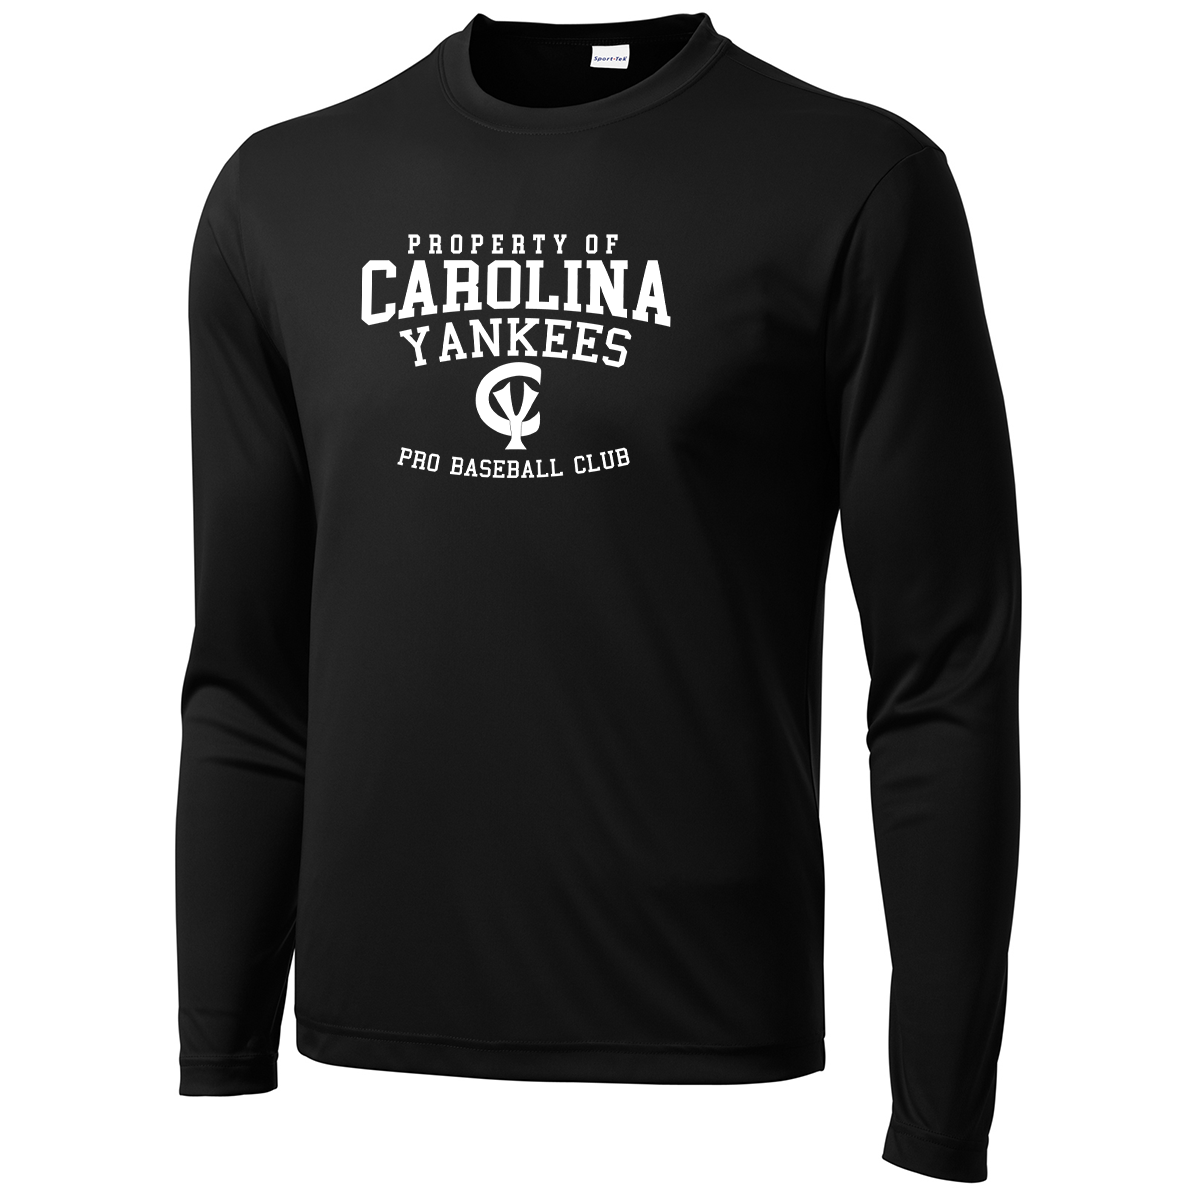 South Carolina Yankees Long Sleeve Performance Shirt